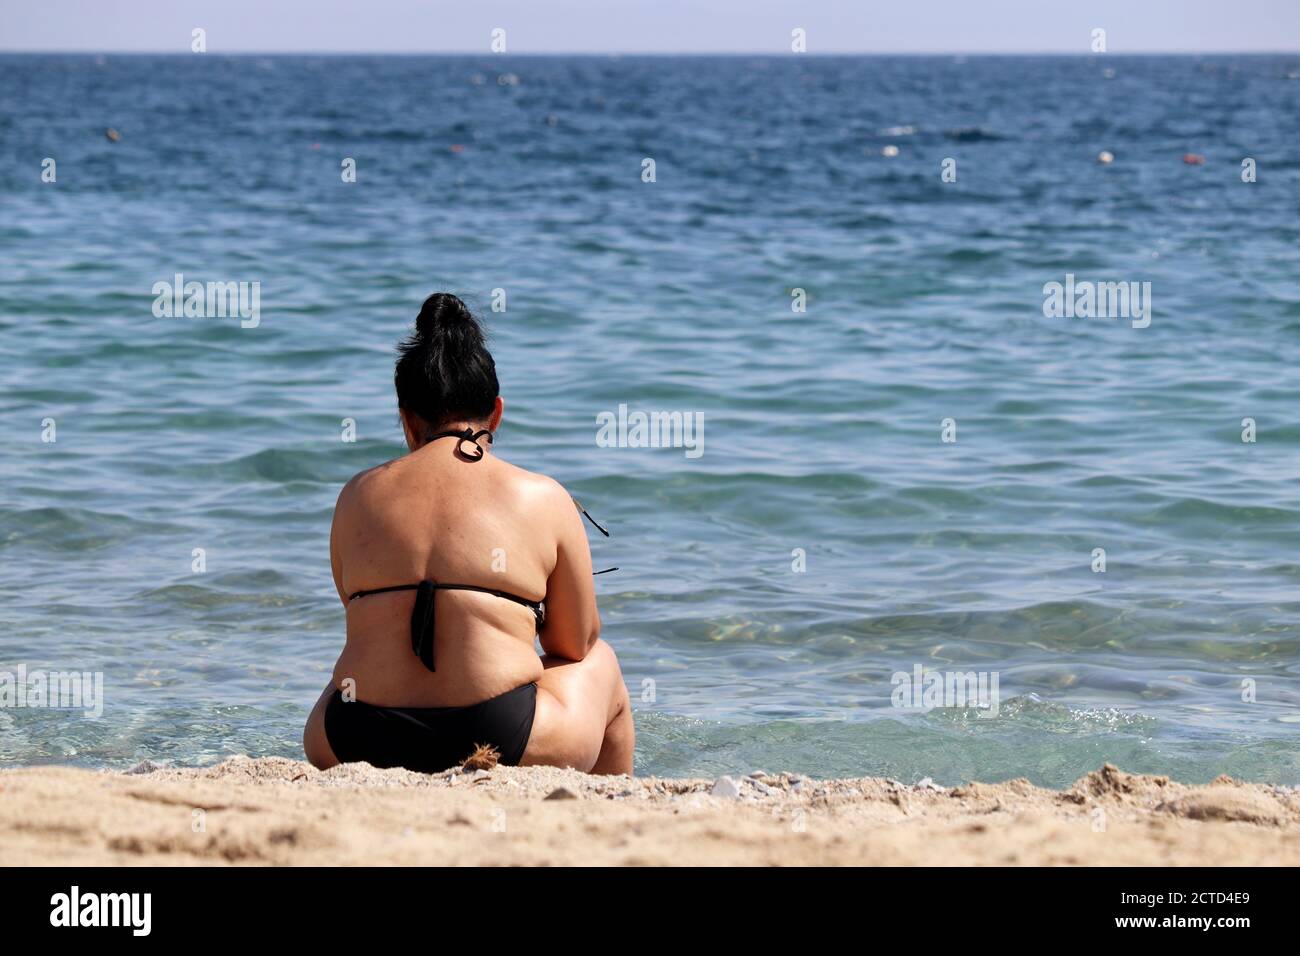 Fat woman bikini beach hi-res stock photography and images - Alamy